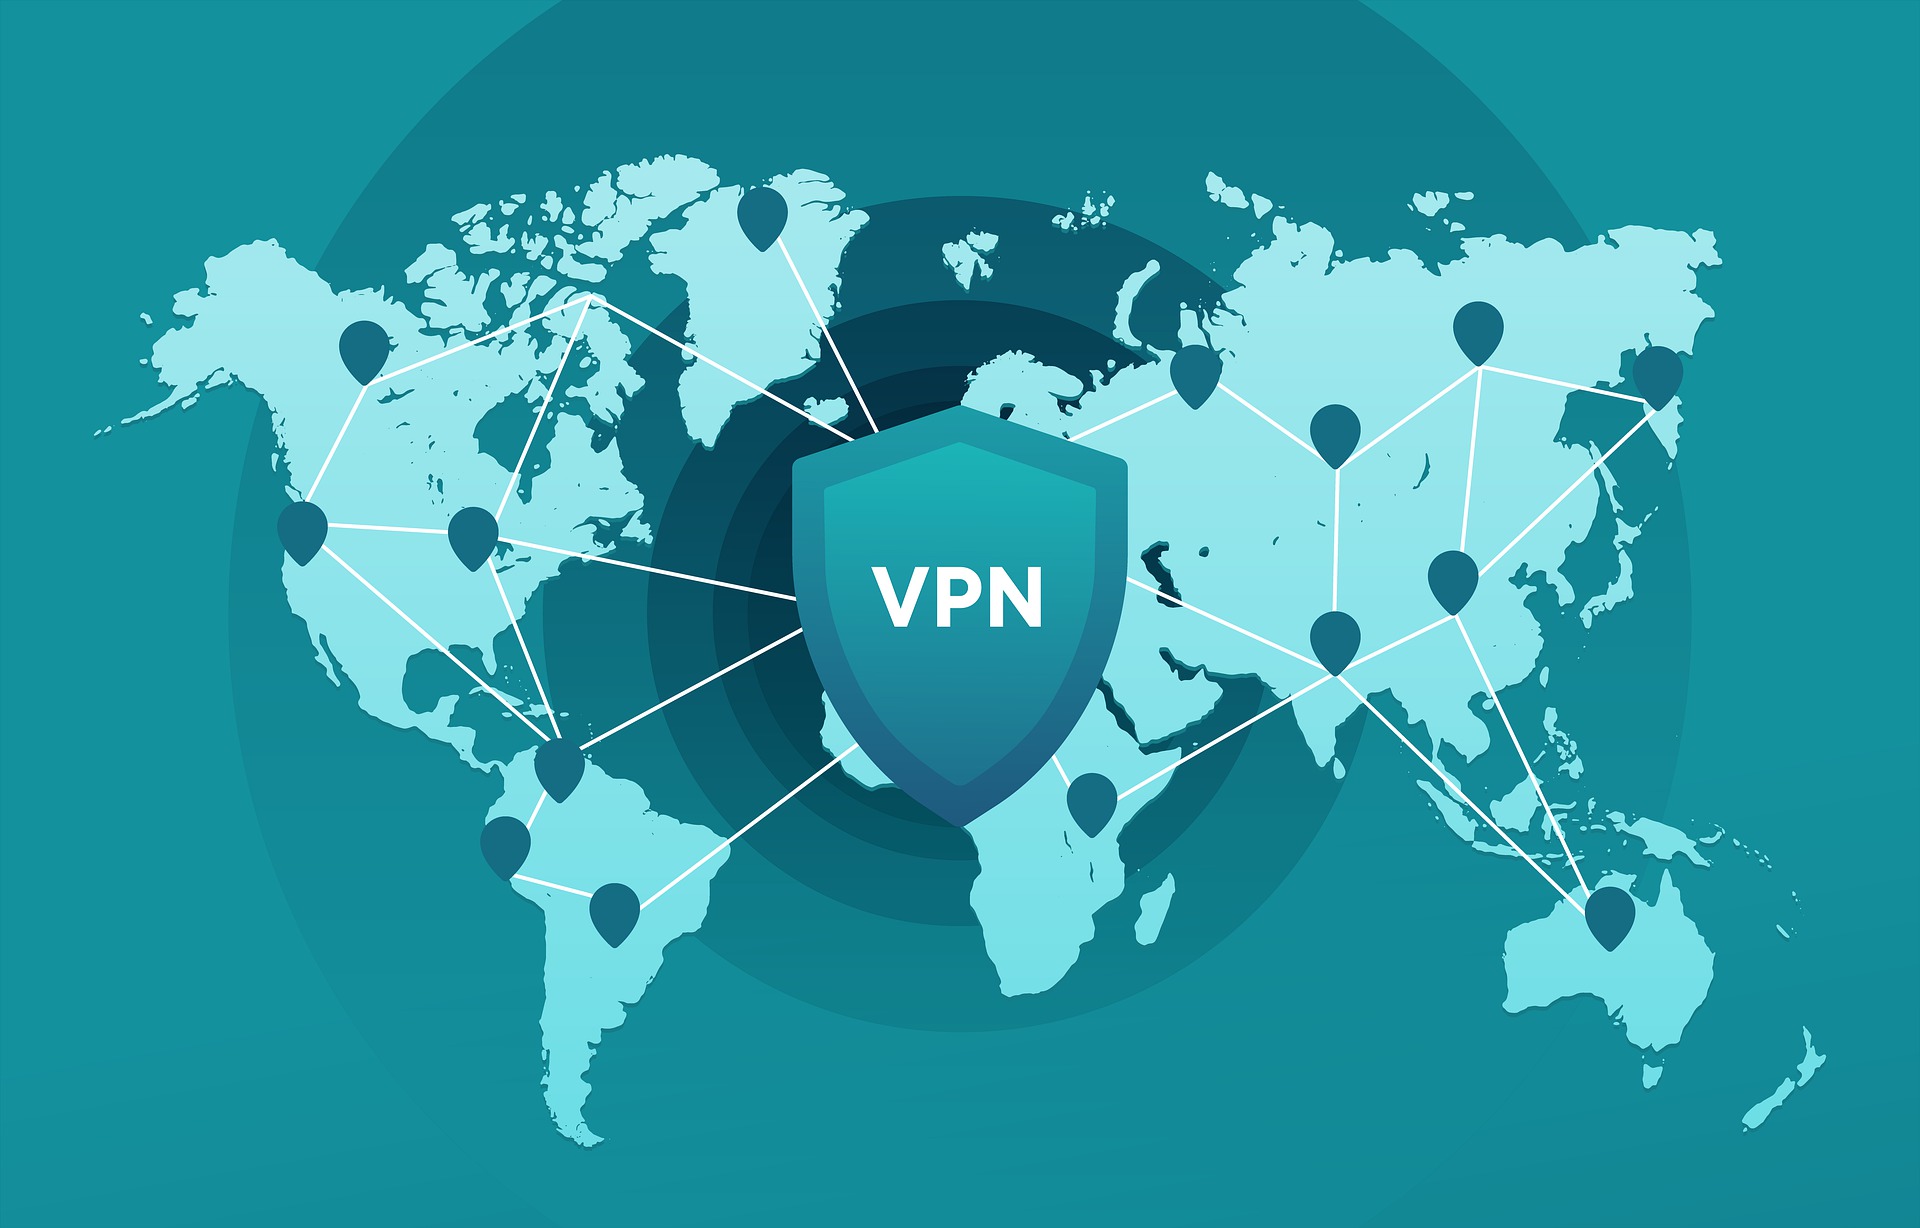 VPN bypassing world internet